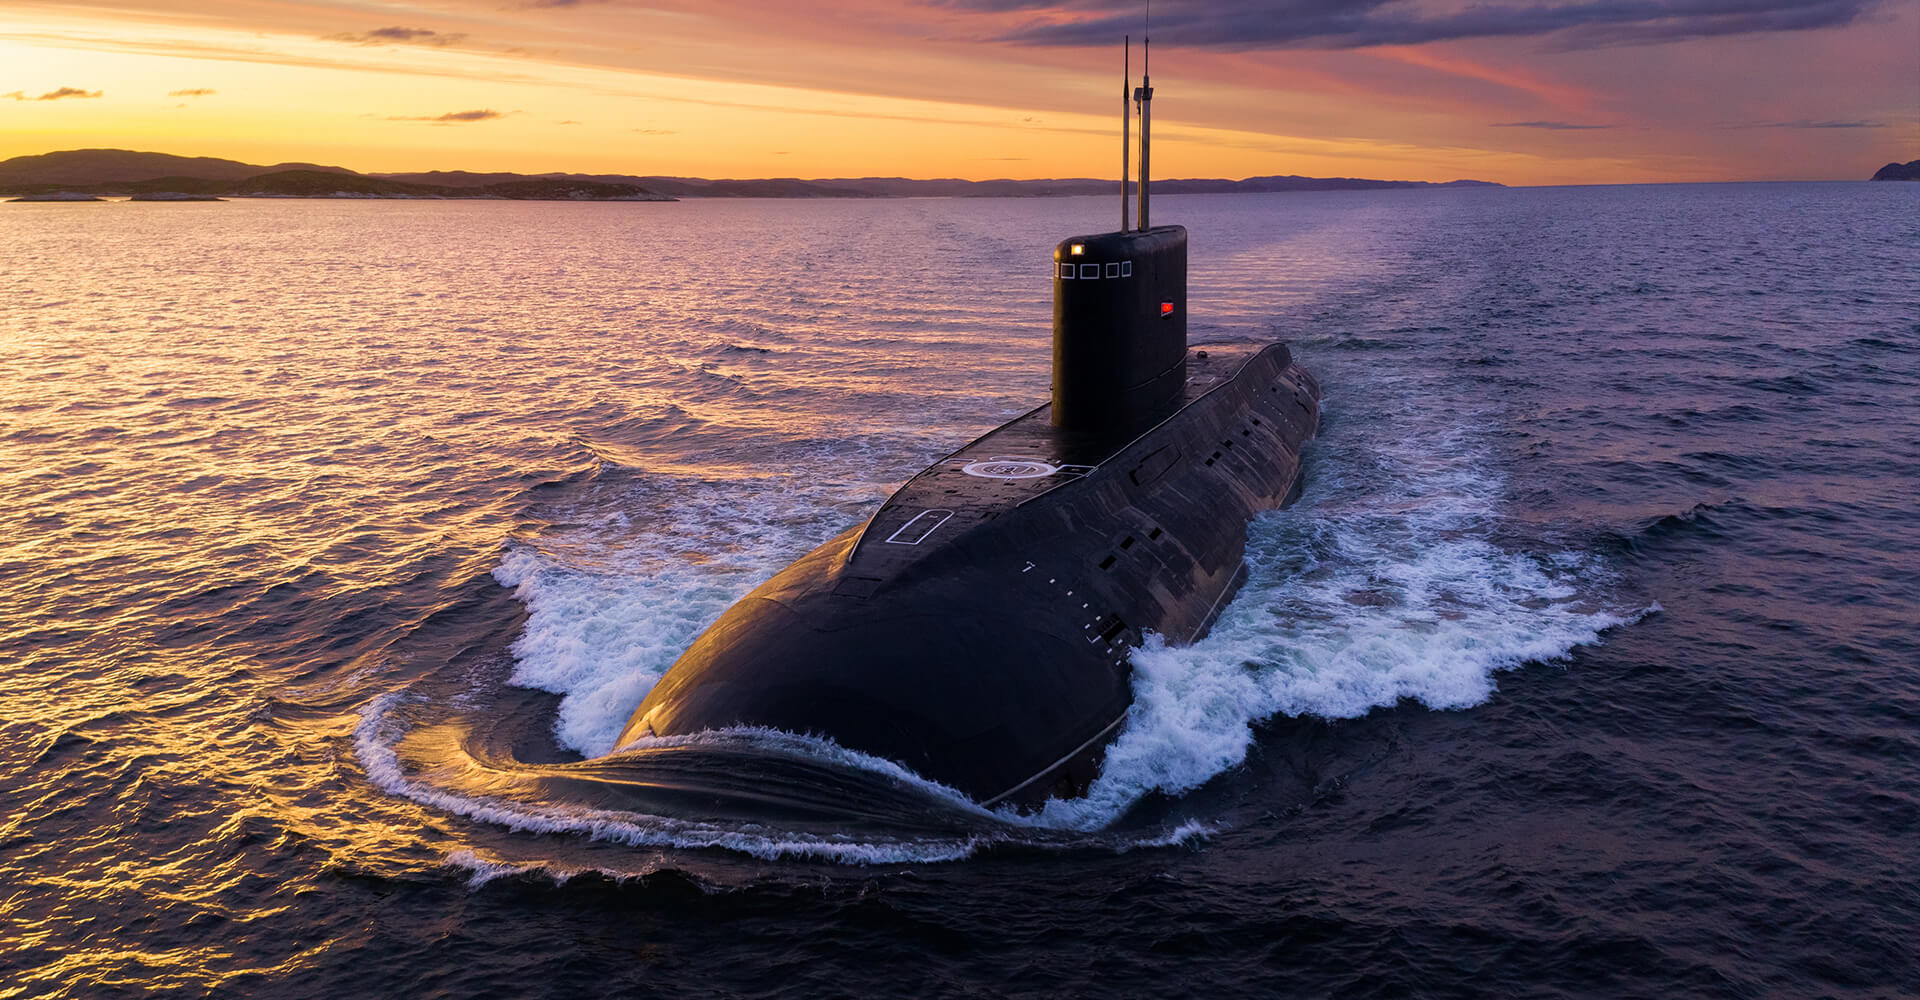 Lsv2 submarine prototype